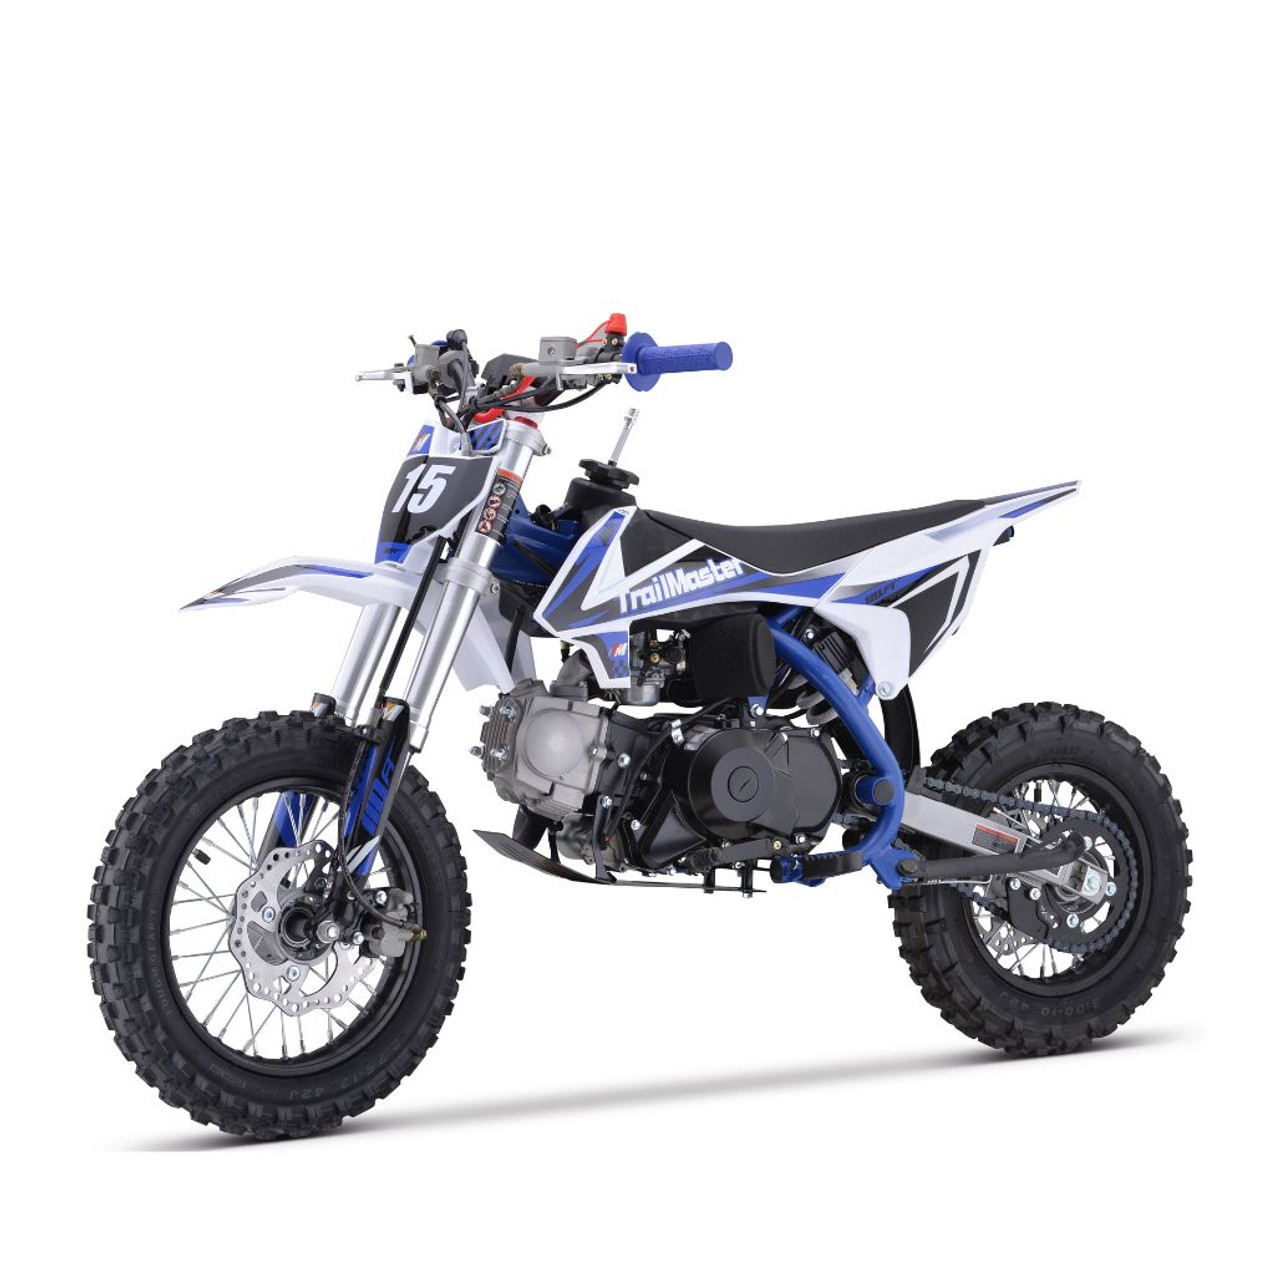 TrailMaster 110cc Dirt Bike Semi-Auto, Electric Start (TM15-110) Blue